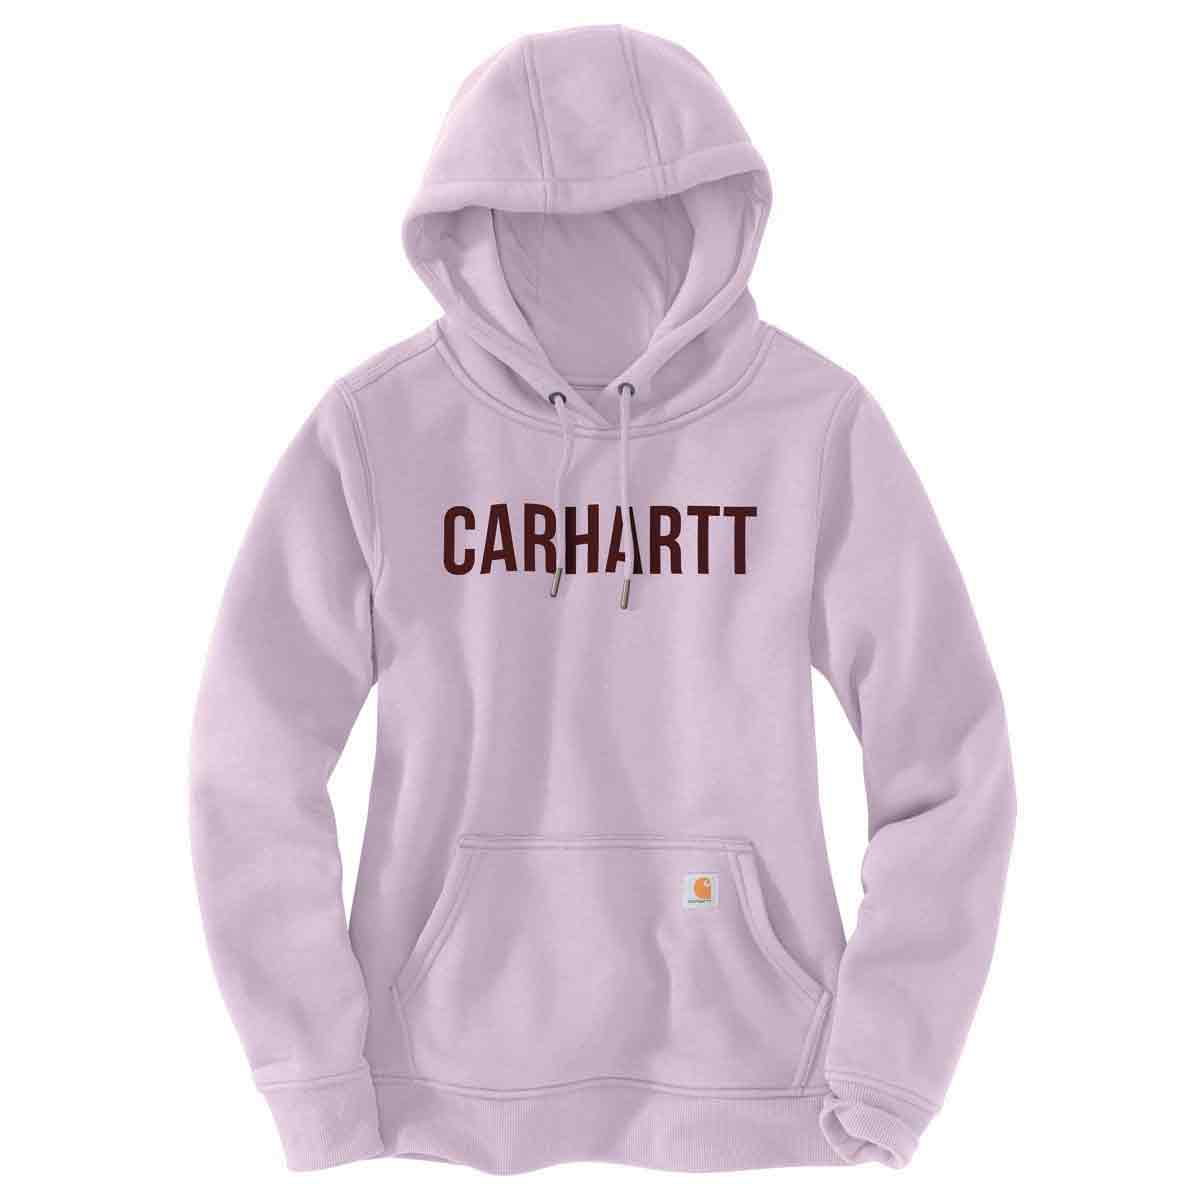 Carhartt Women's Relaxed Fit MW Graphic Sweatshirt